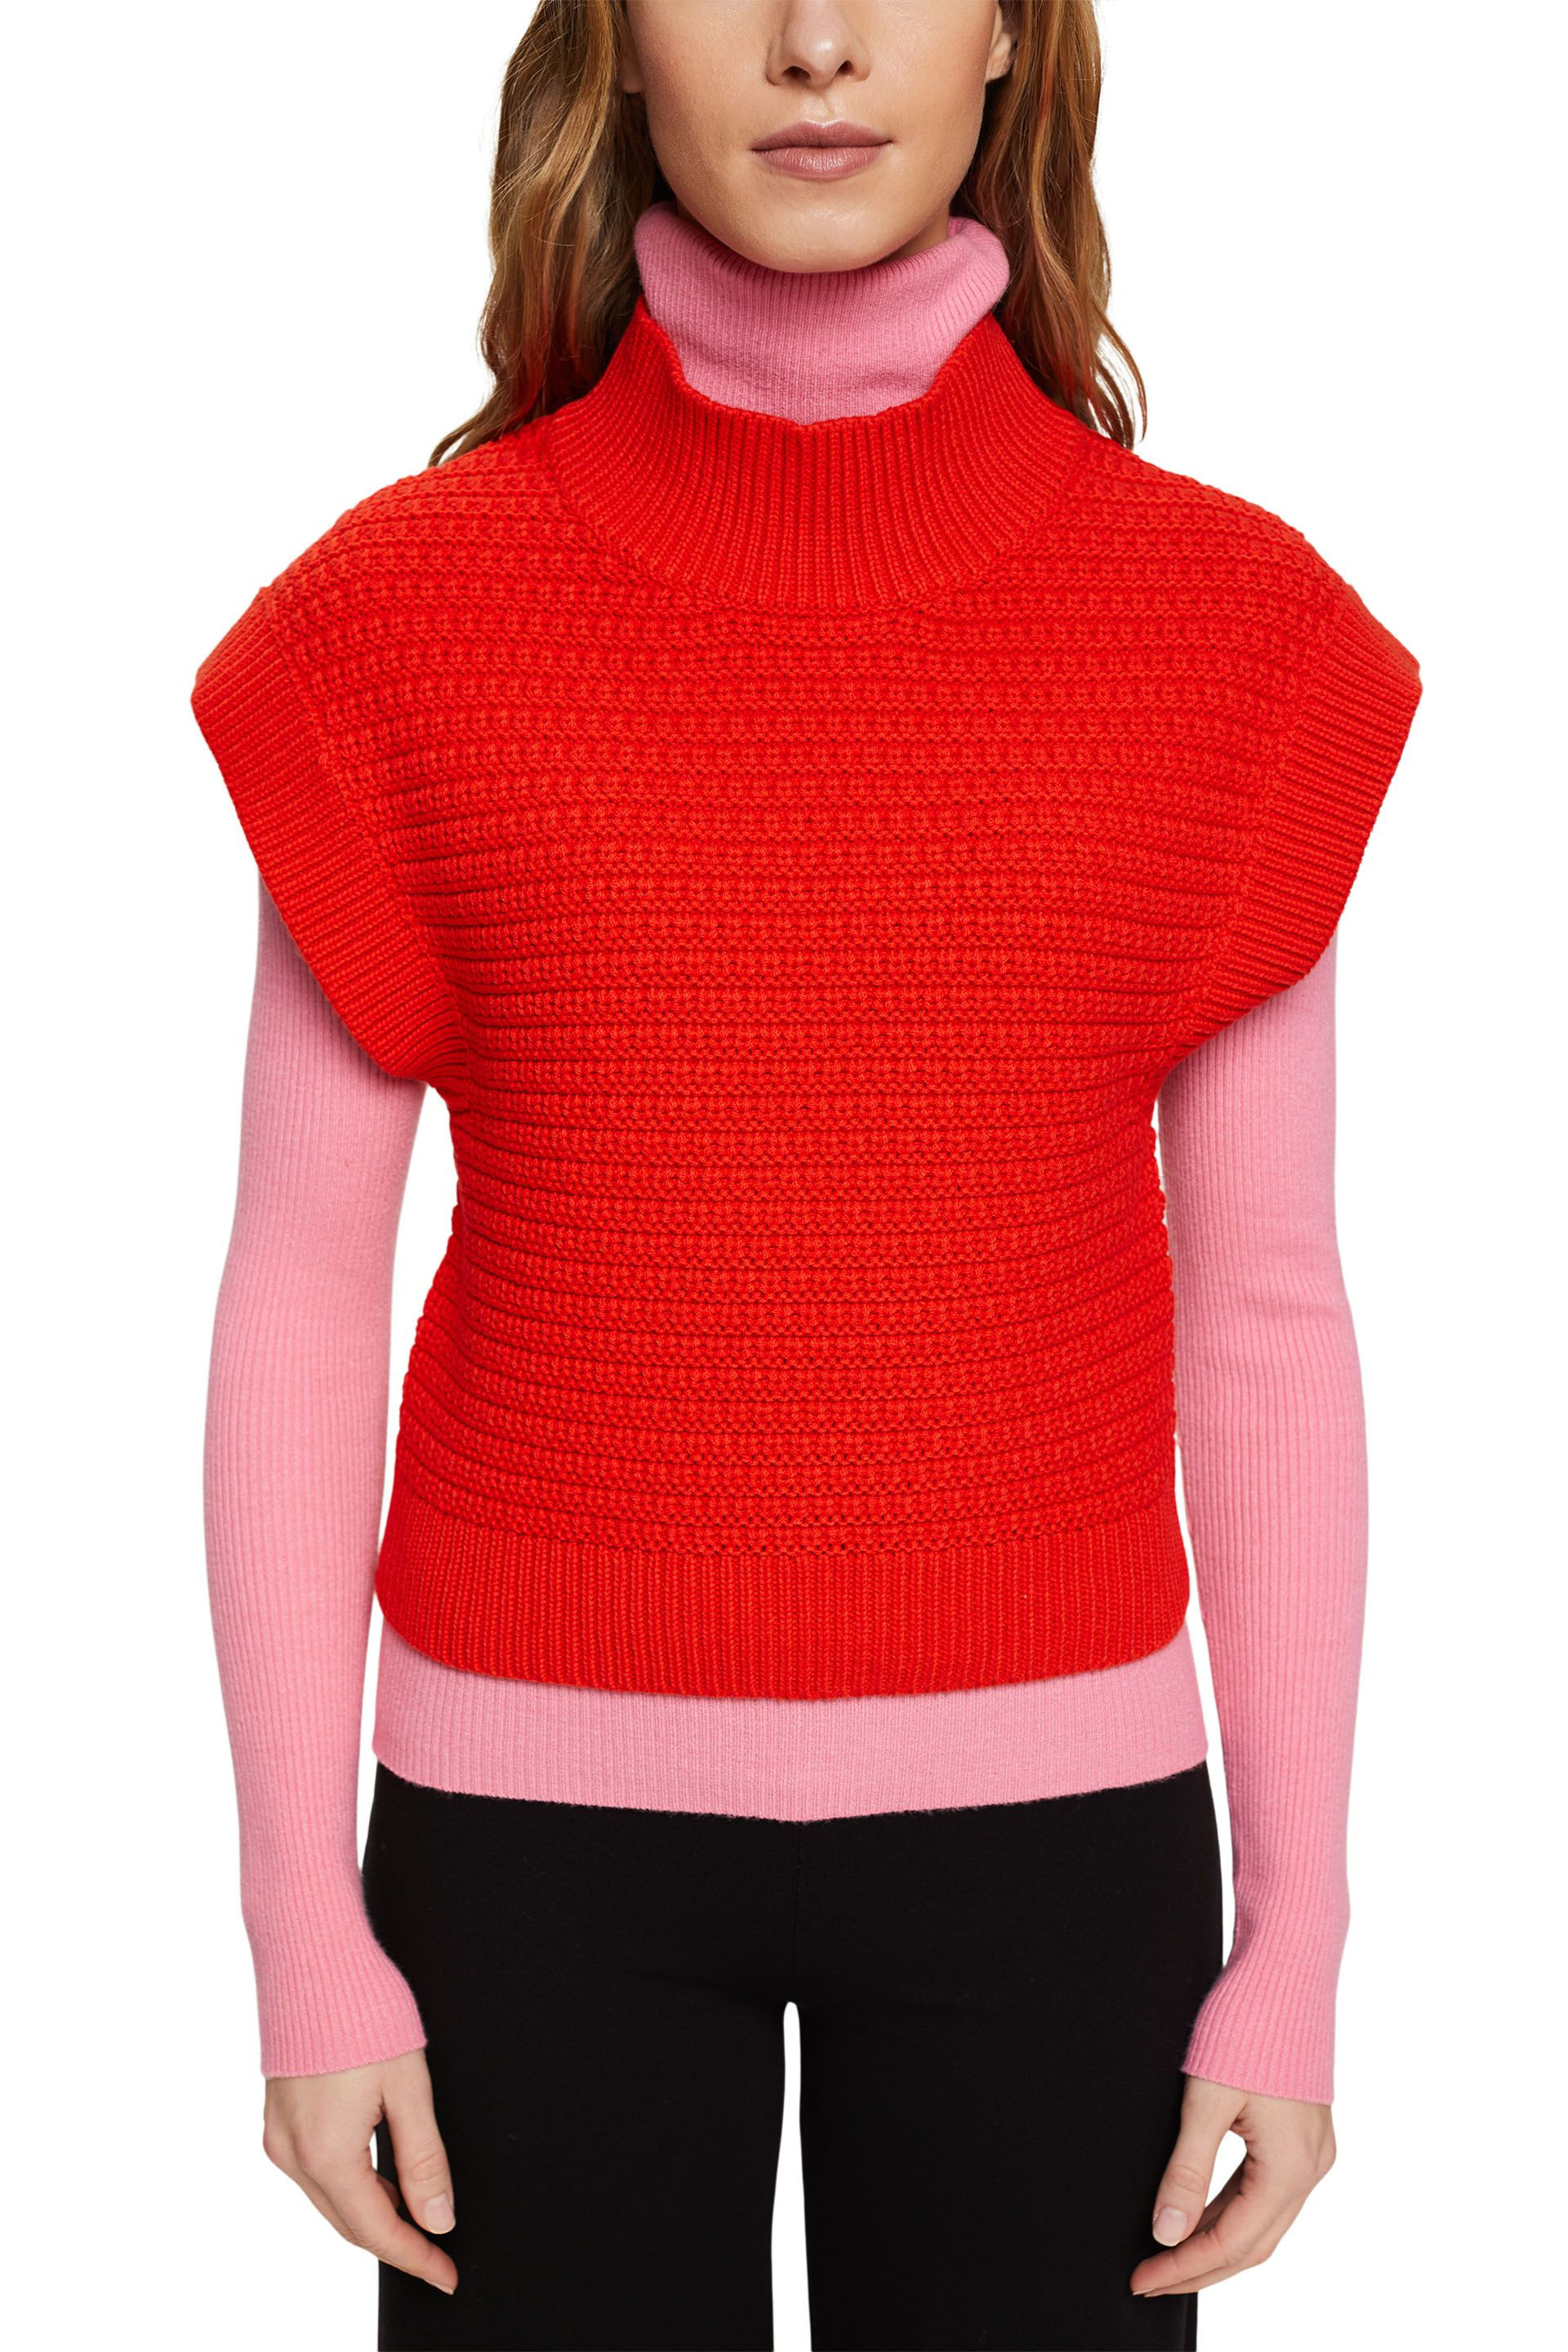 Esprit - Knitted vest in cotton blend, Red, large image number 1